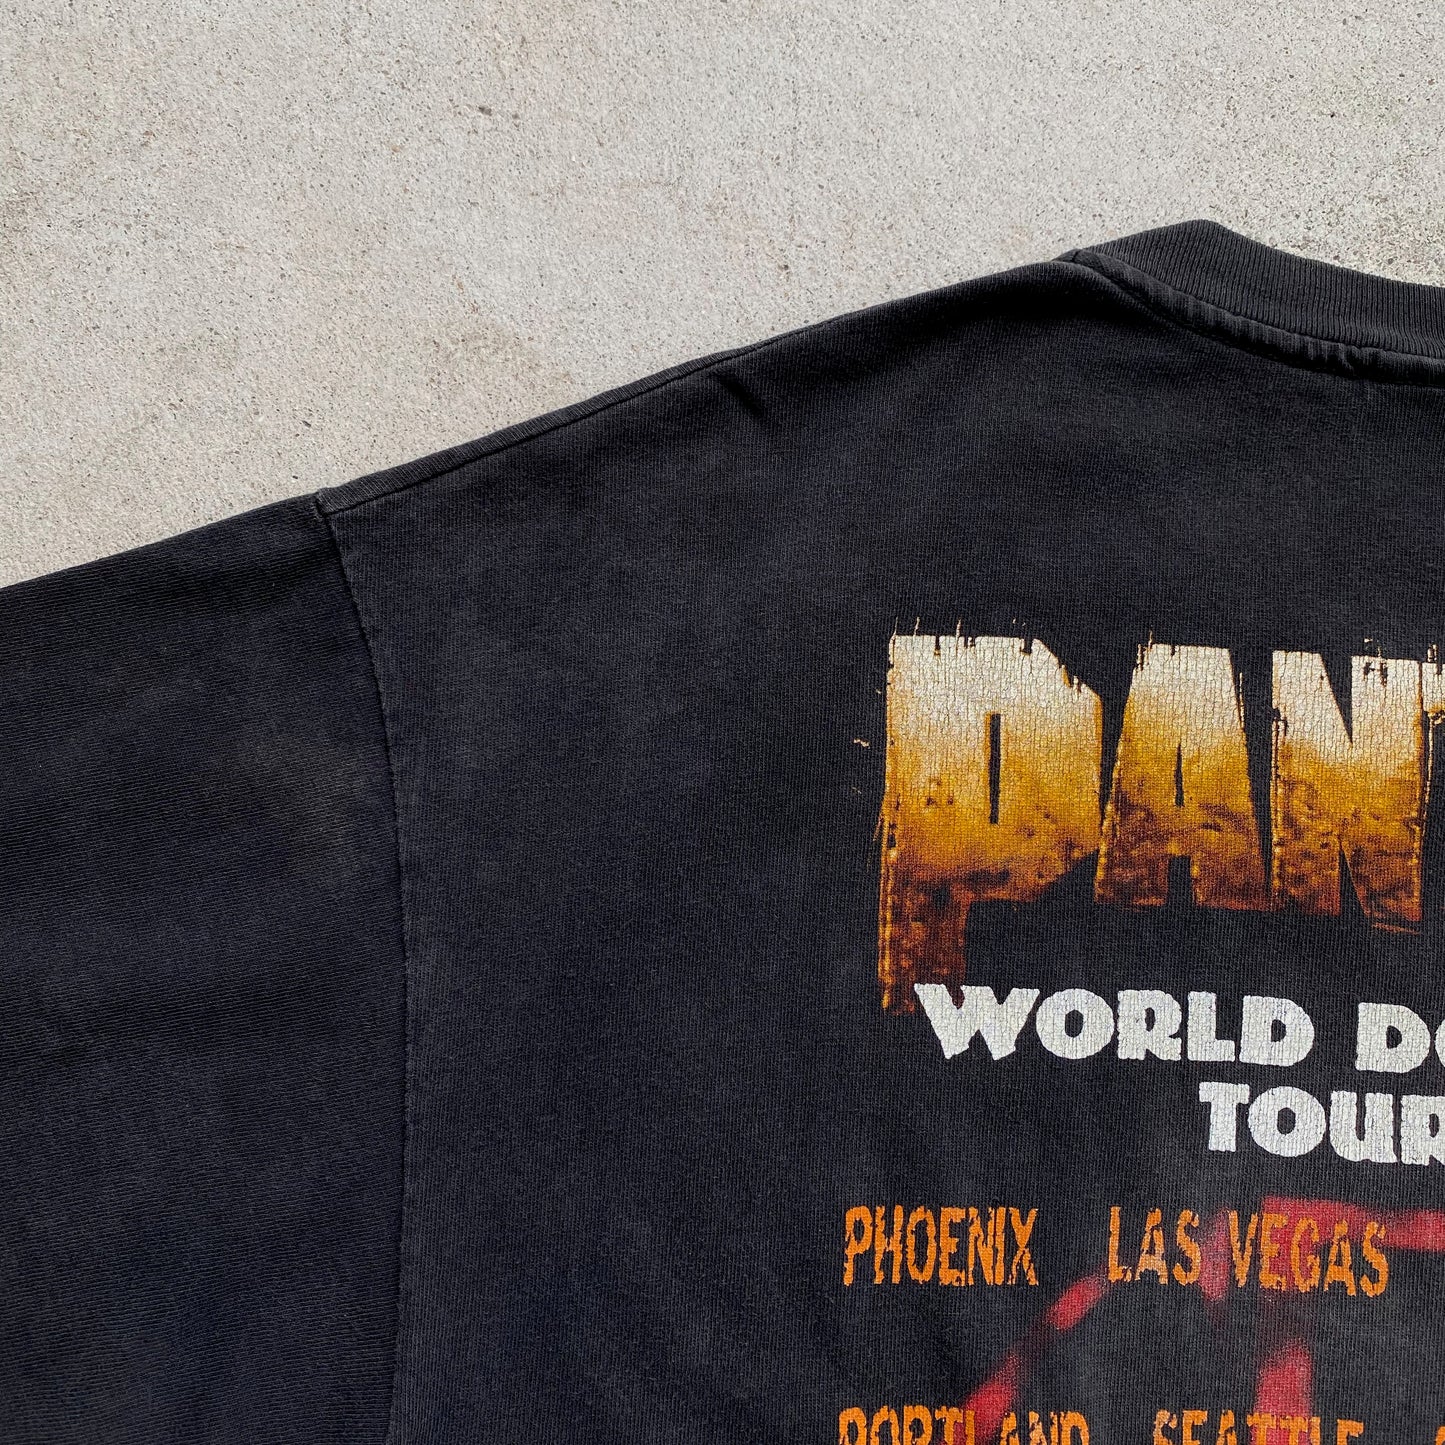 90's PANTERA "WORLD DOMINATION TOUR" T-SHIRT